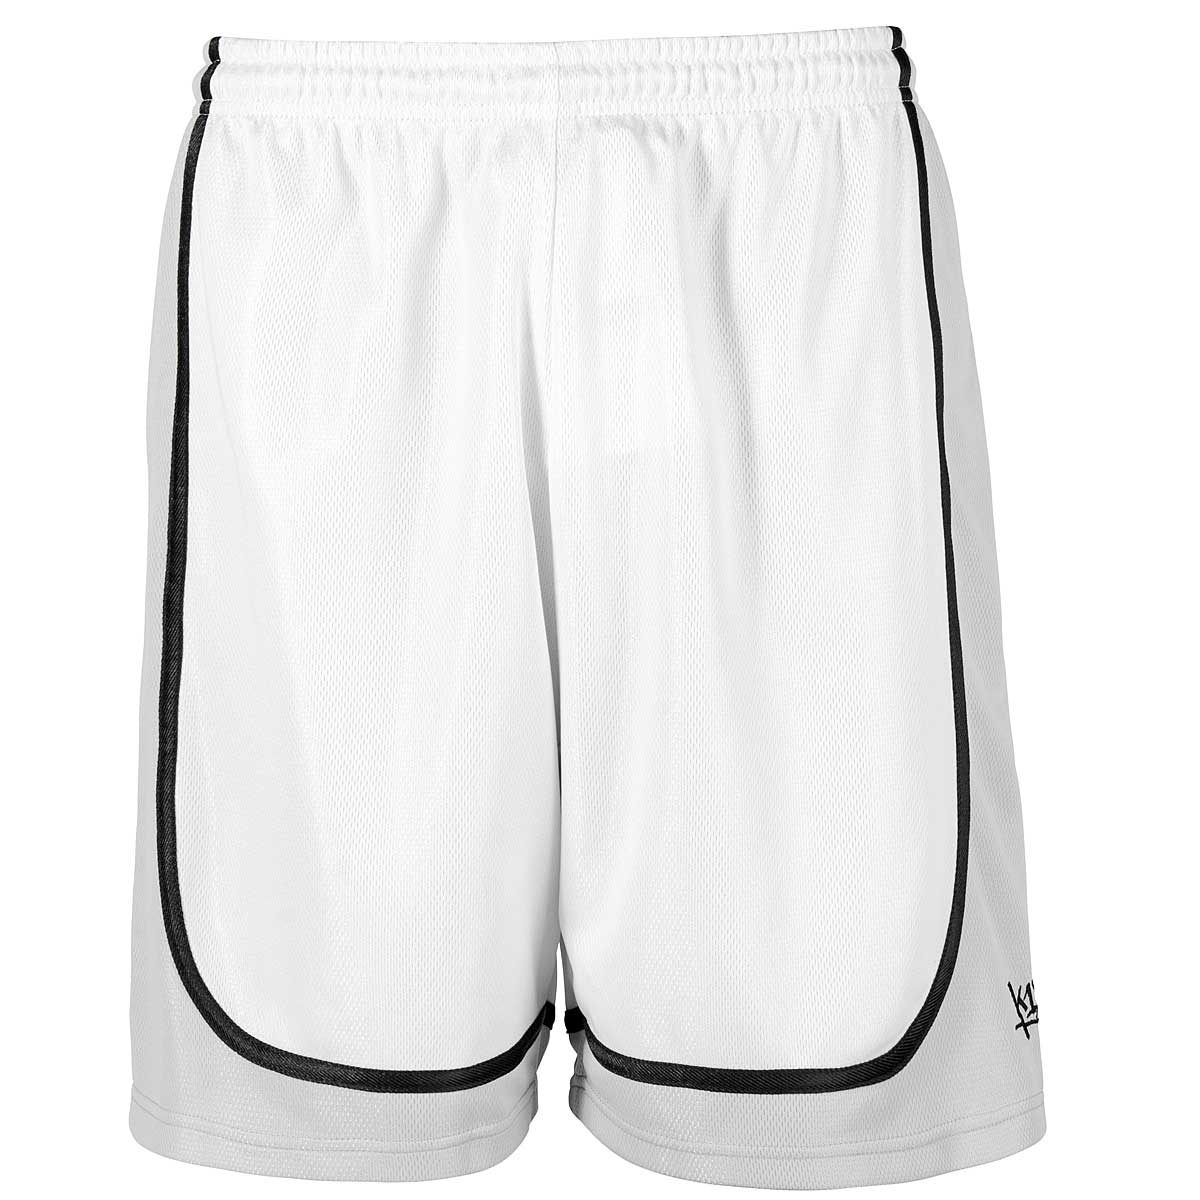 K1X K1X Hardwood League Uniform Shorts Mk2, White/Silver/Black